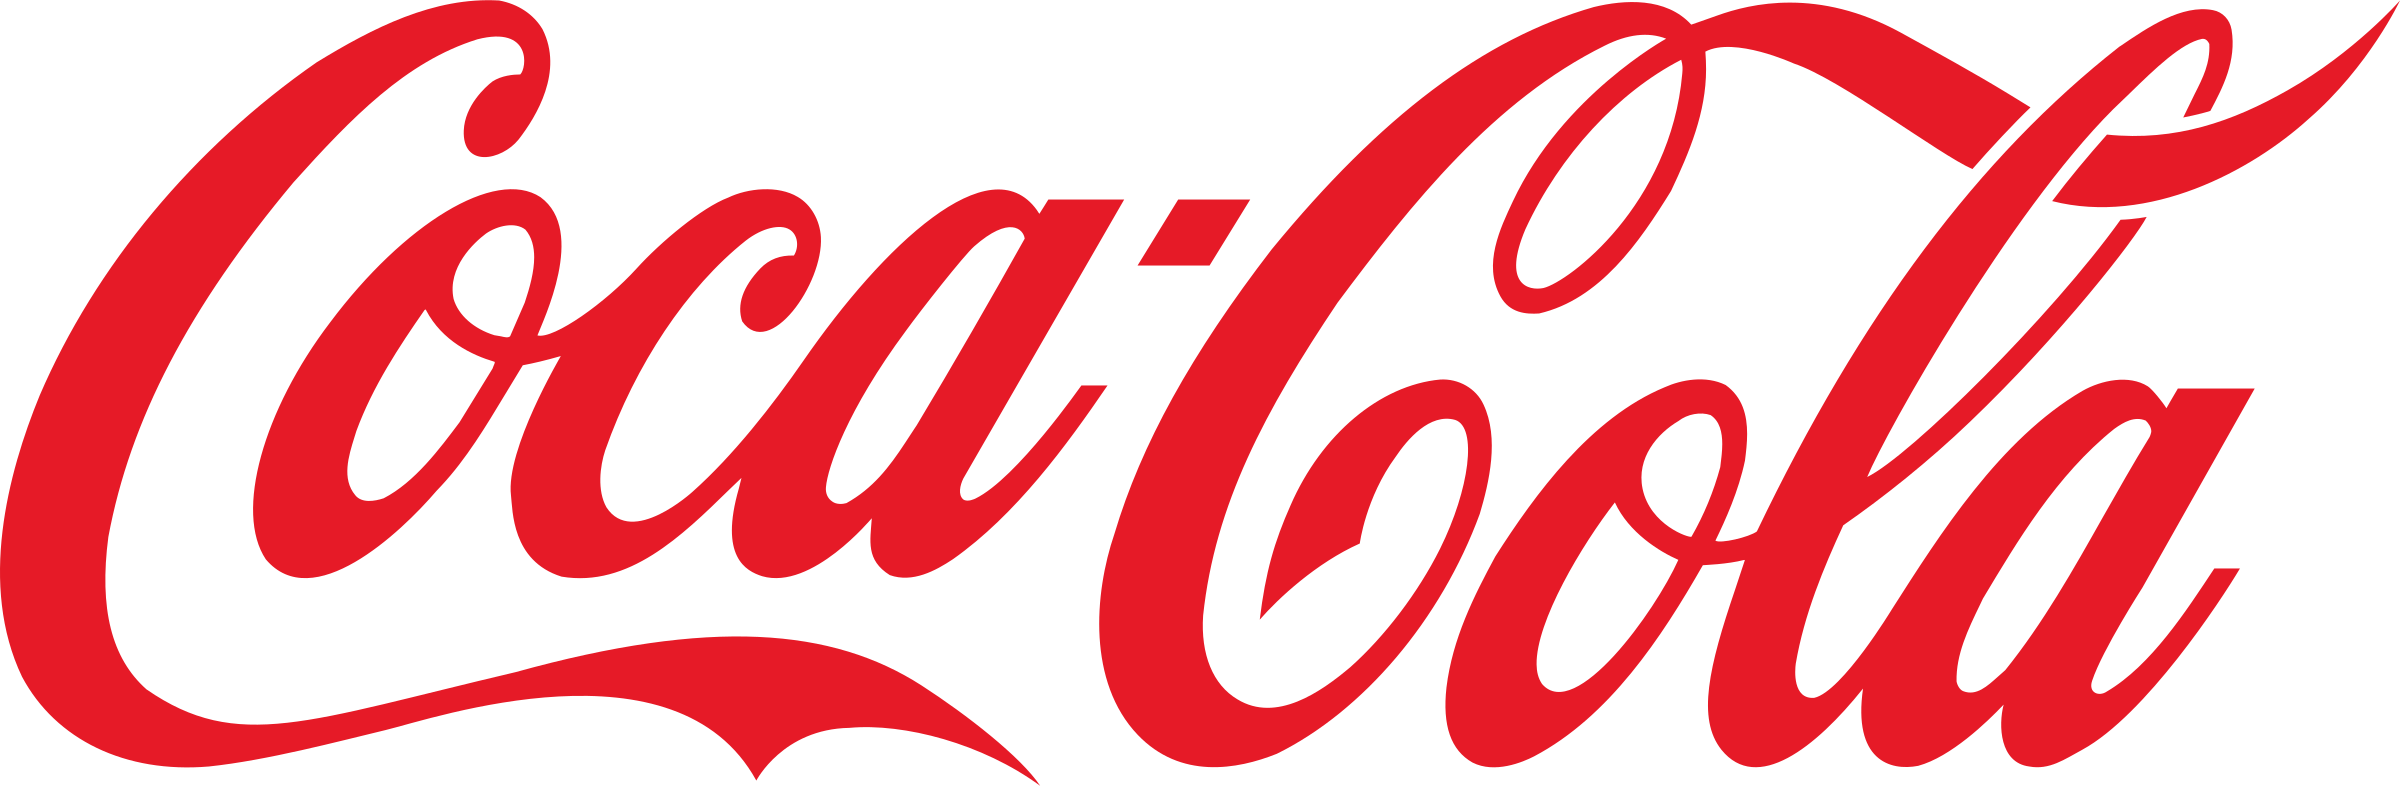 Coca Cola logo-1